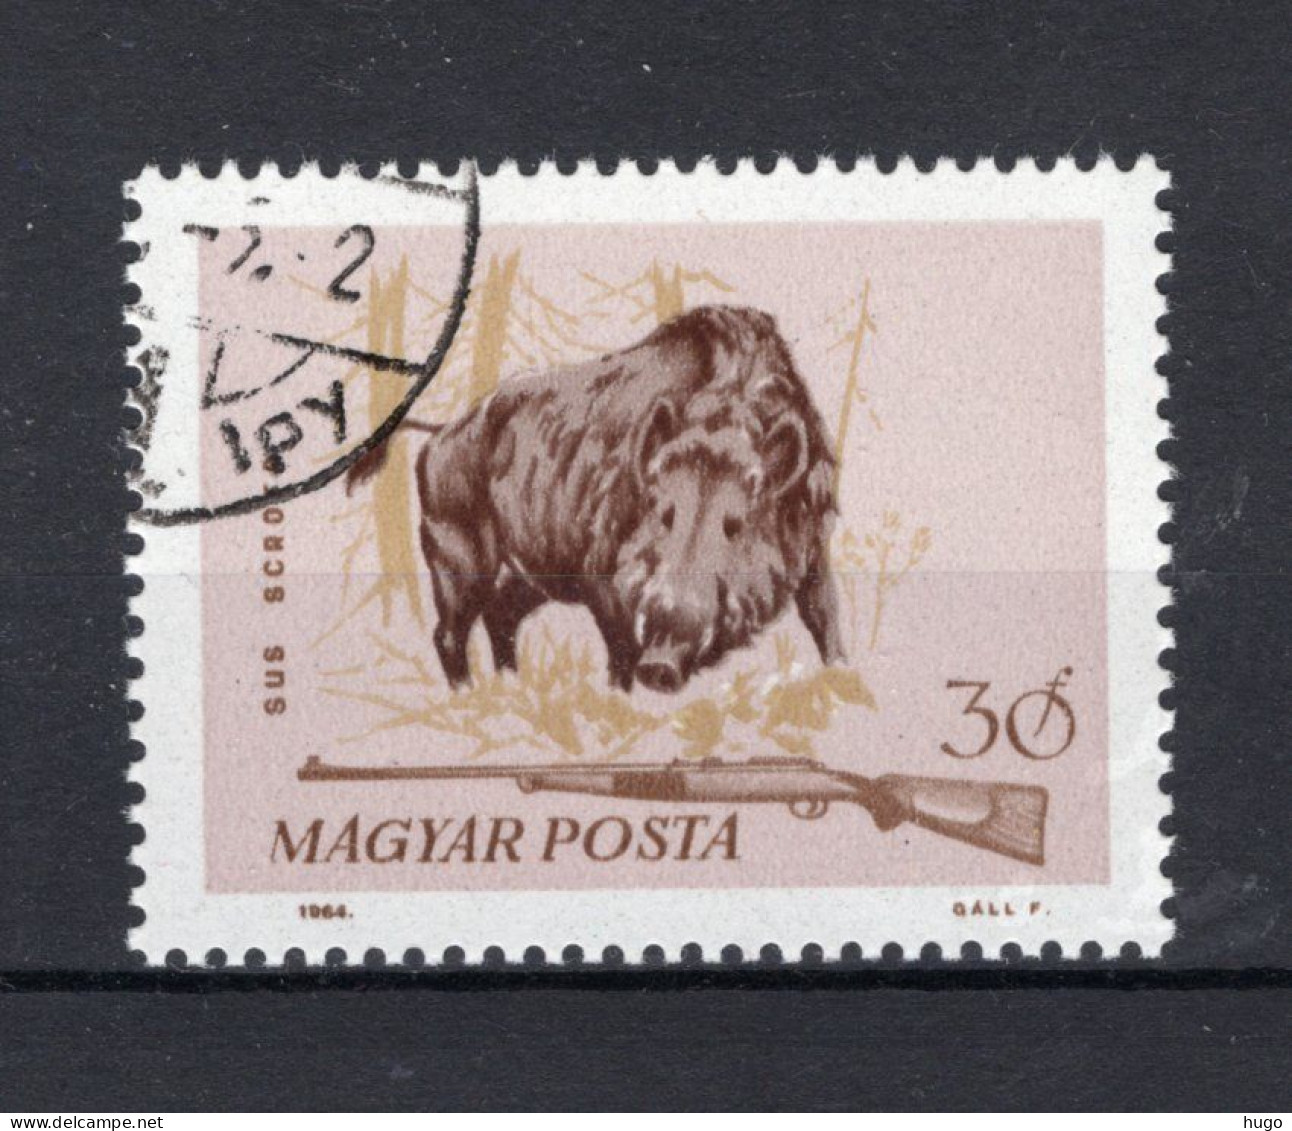 HONGARIJE Yt. 1691° Gestempeld 1964 - Gebraucht